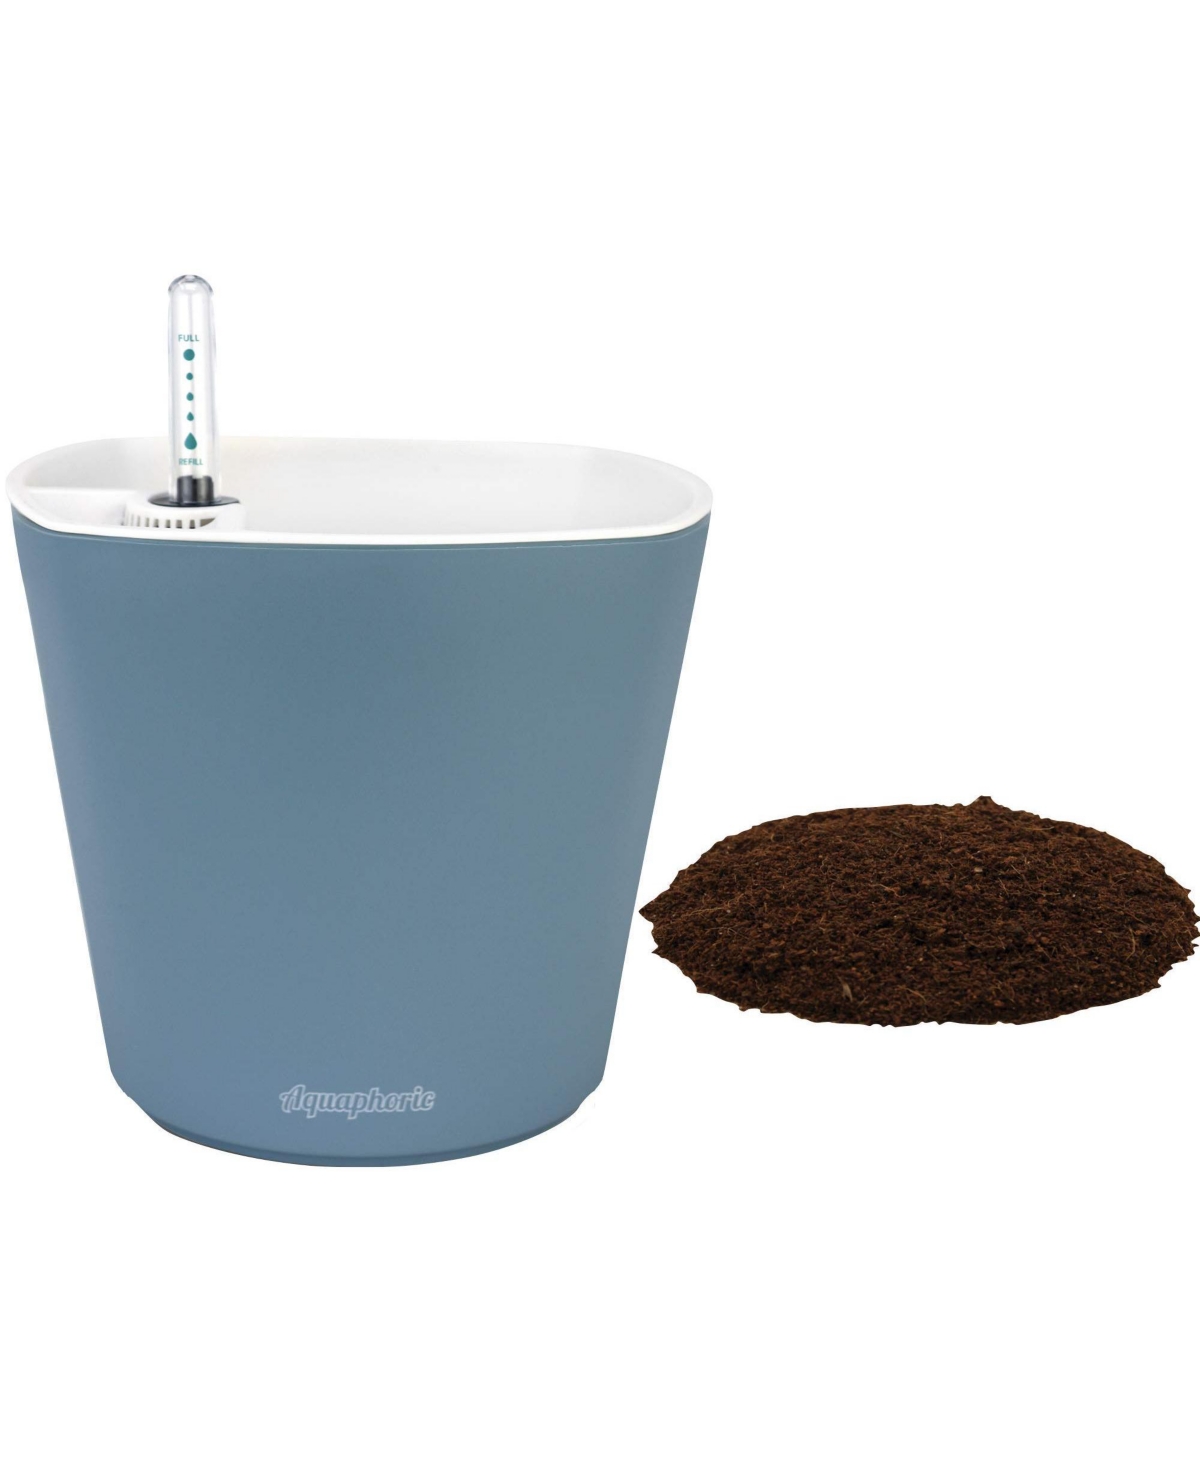 Aquaphoric Self Watering Planter (7") + Fiber Soil = Foolproof Indoor Garden. Decorative Planter Pot for House Plants, Flowers, Herbs, V